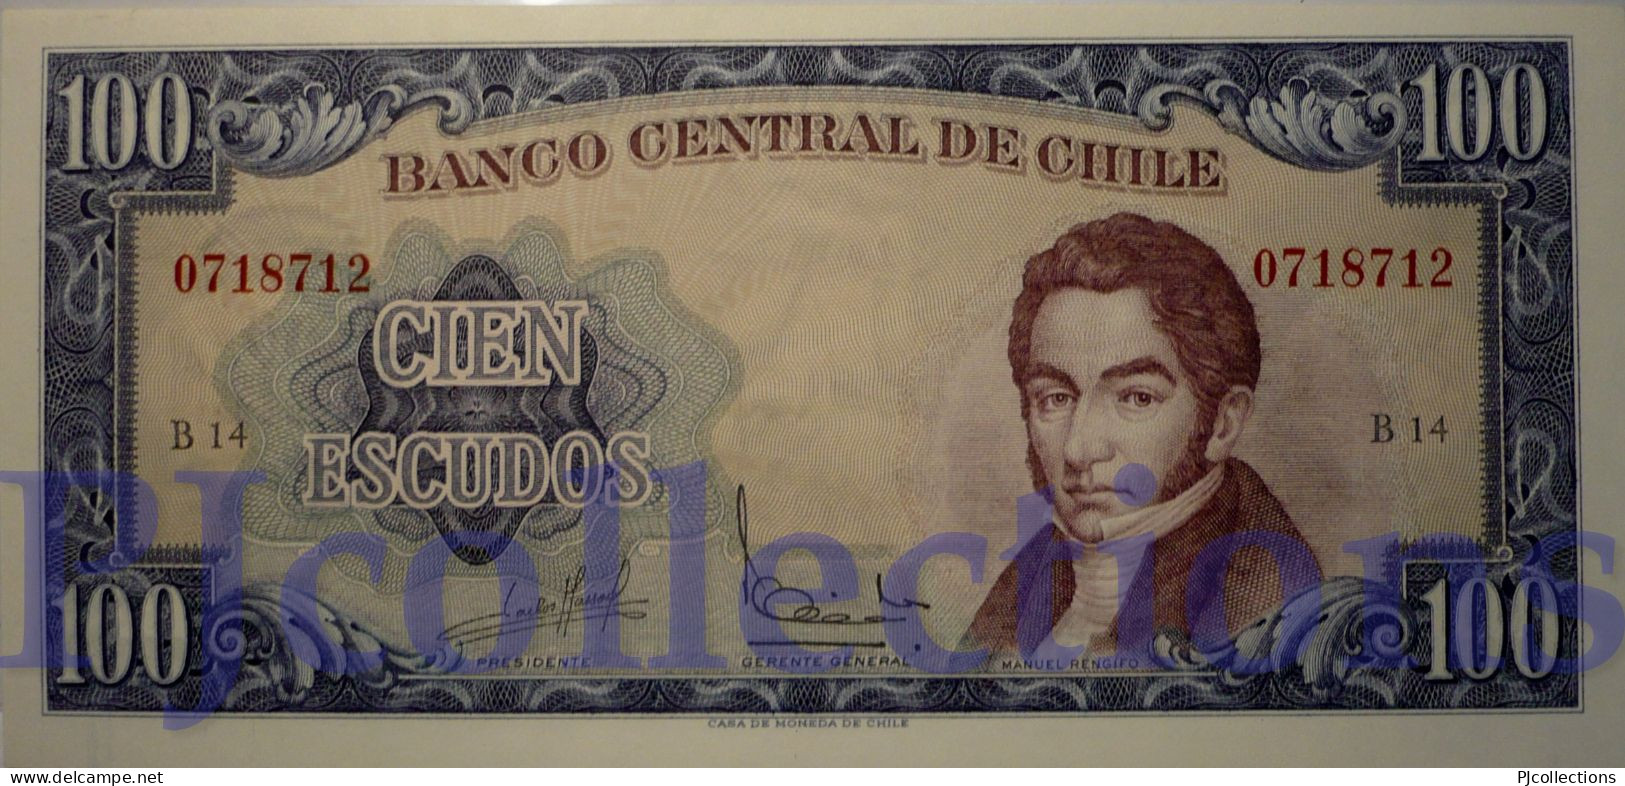 CHILE 100 PESOS 1962/75 PICK 141a UNC SERIE "B" SIG. MASSAD - IBANEZ - Chili